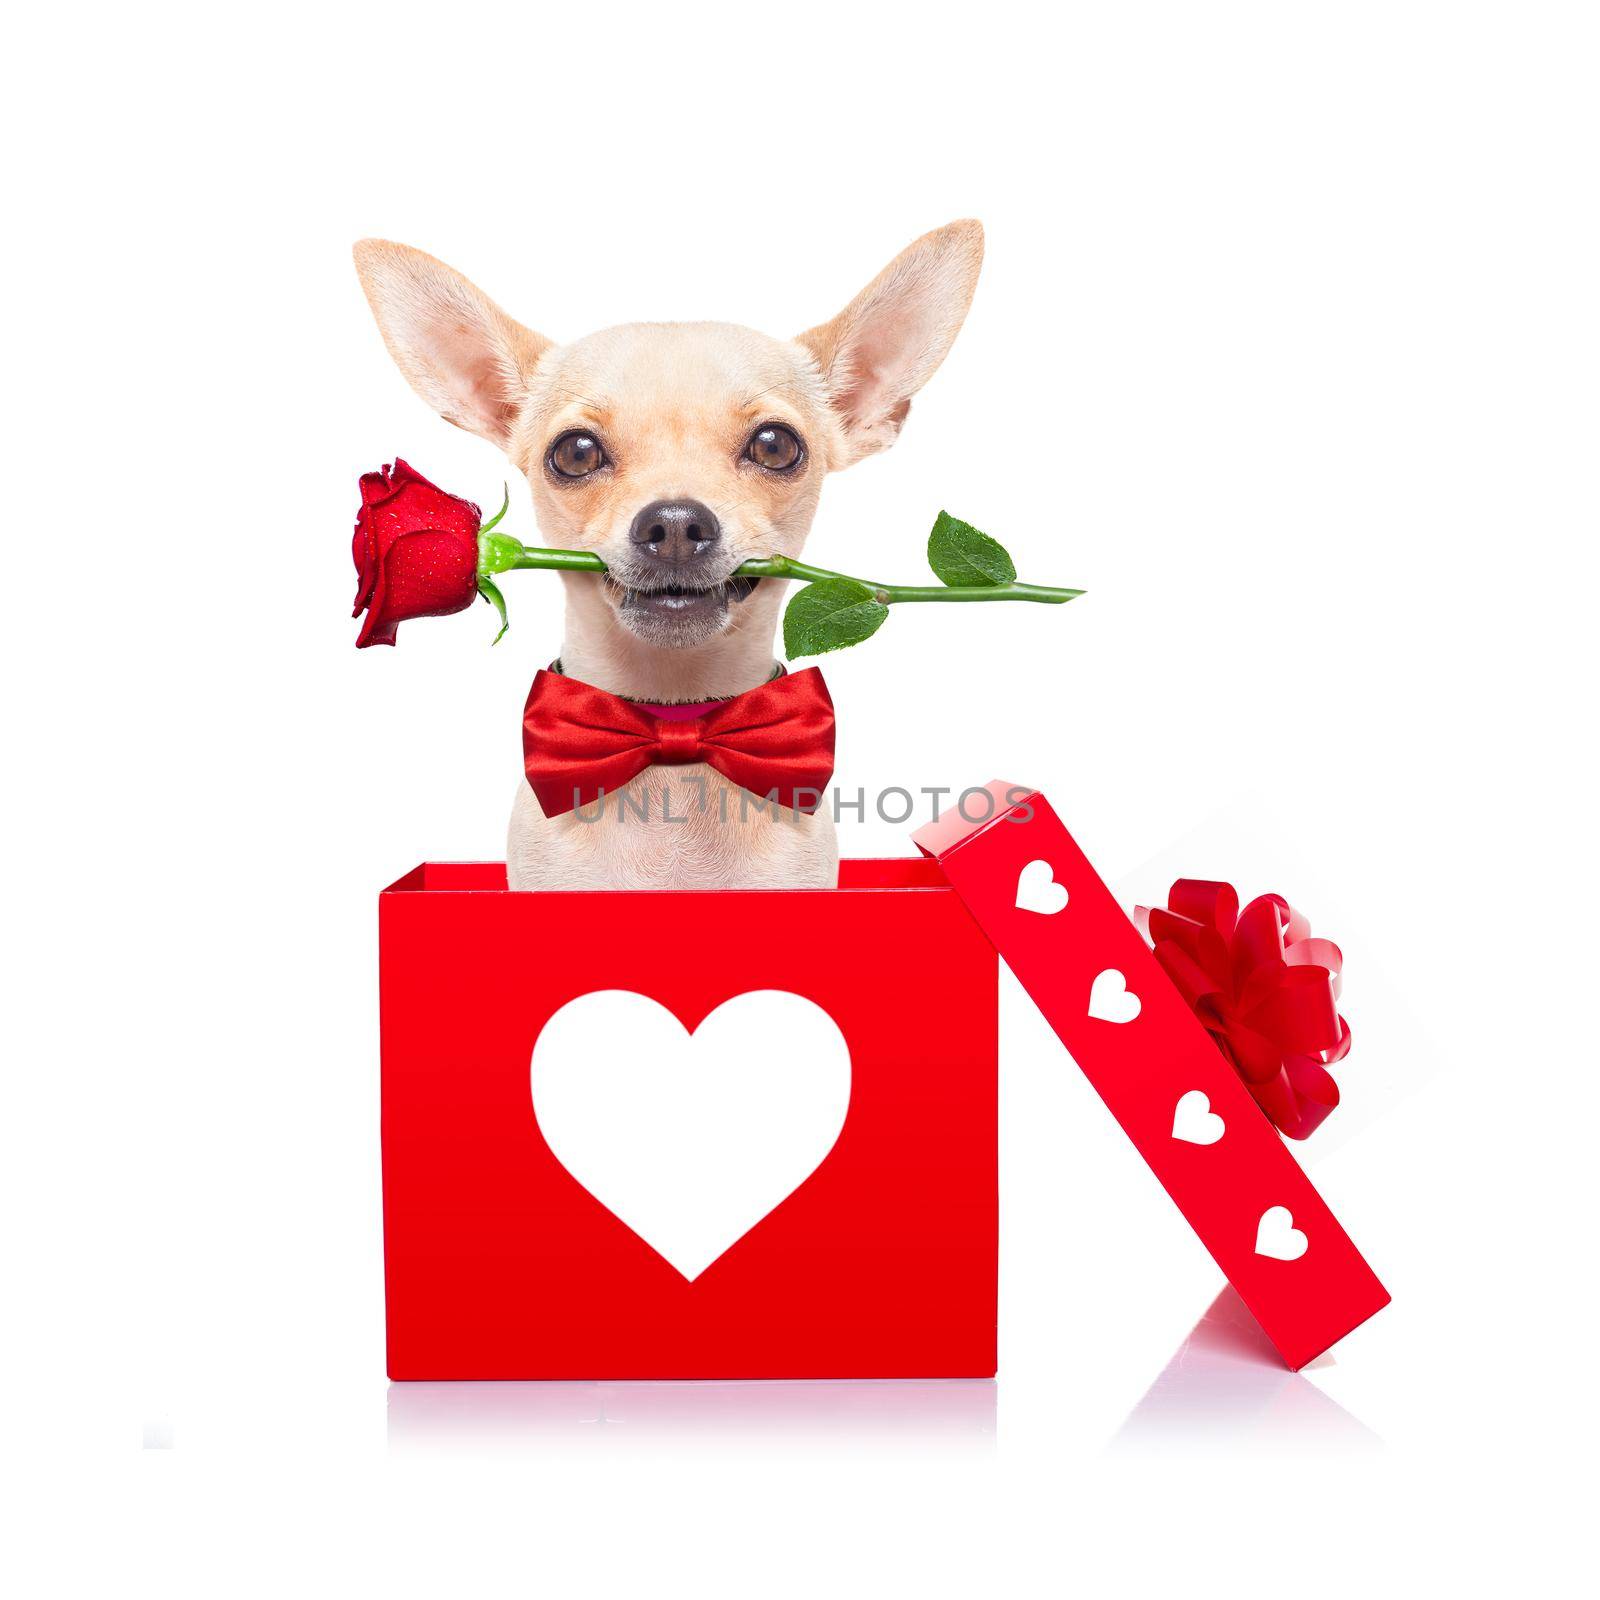 happy valentines dog by Brosch